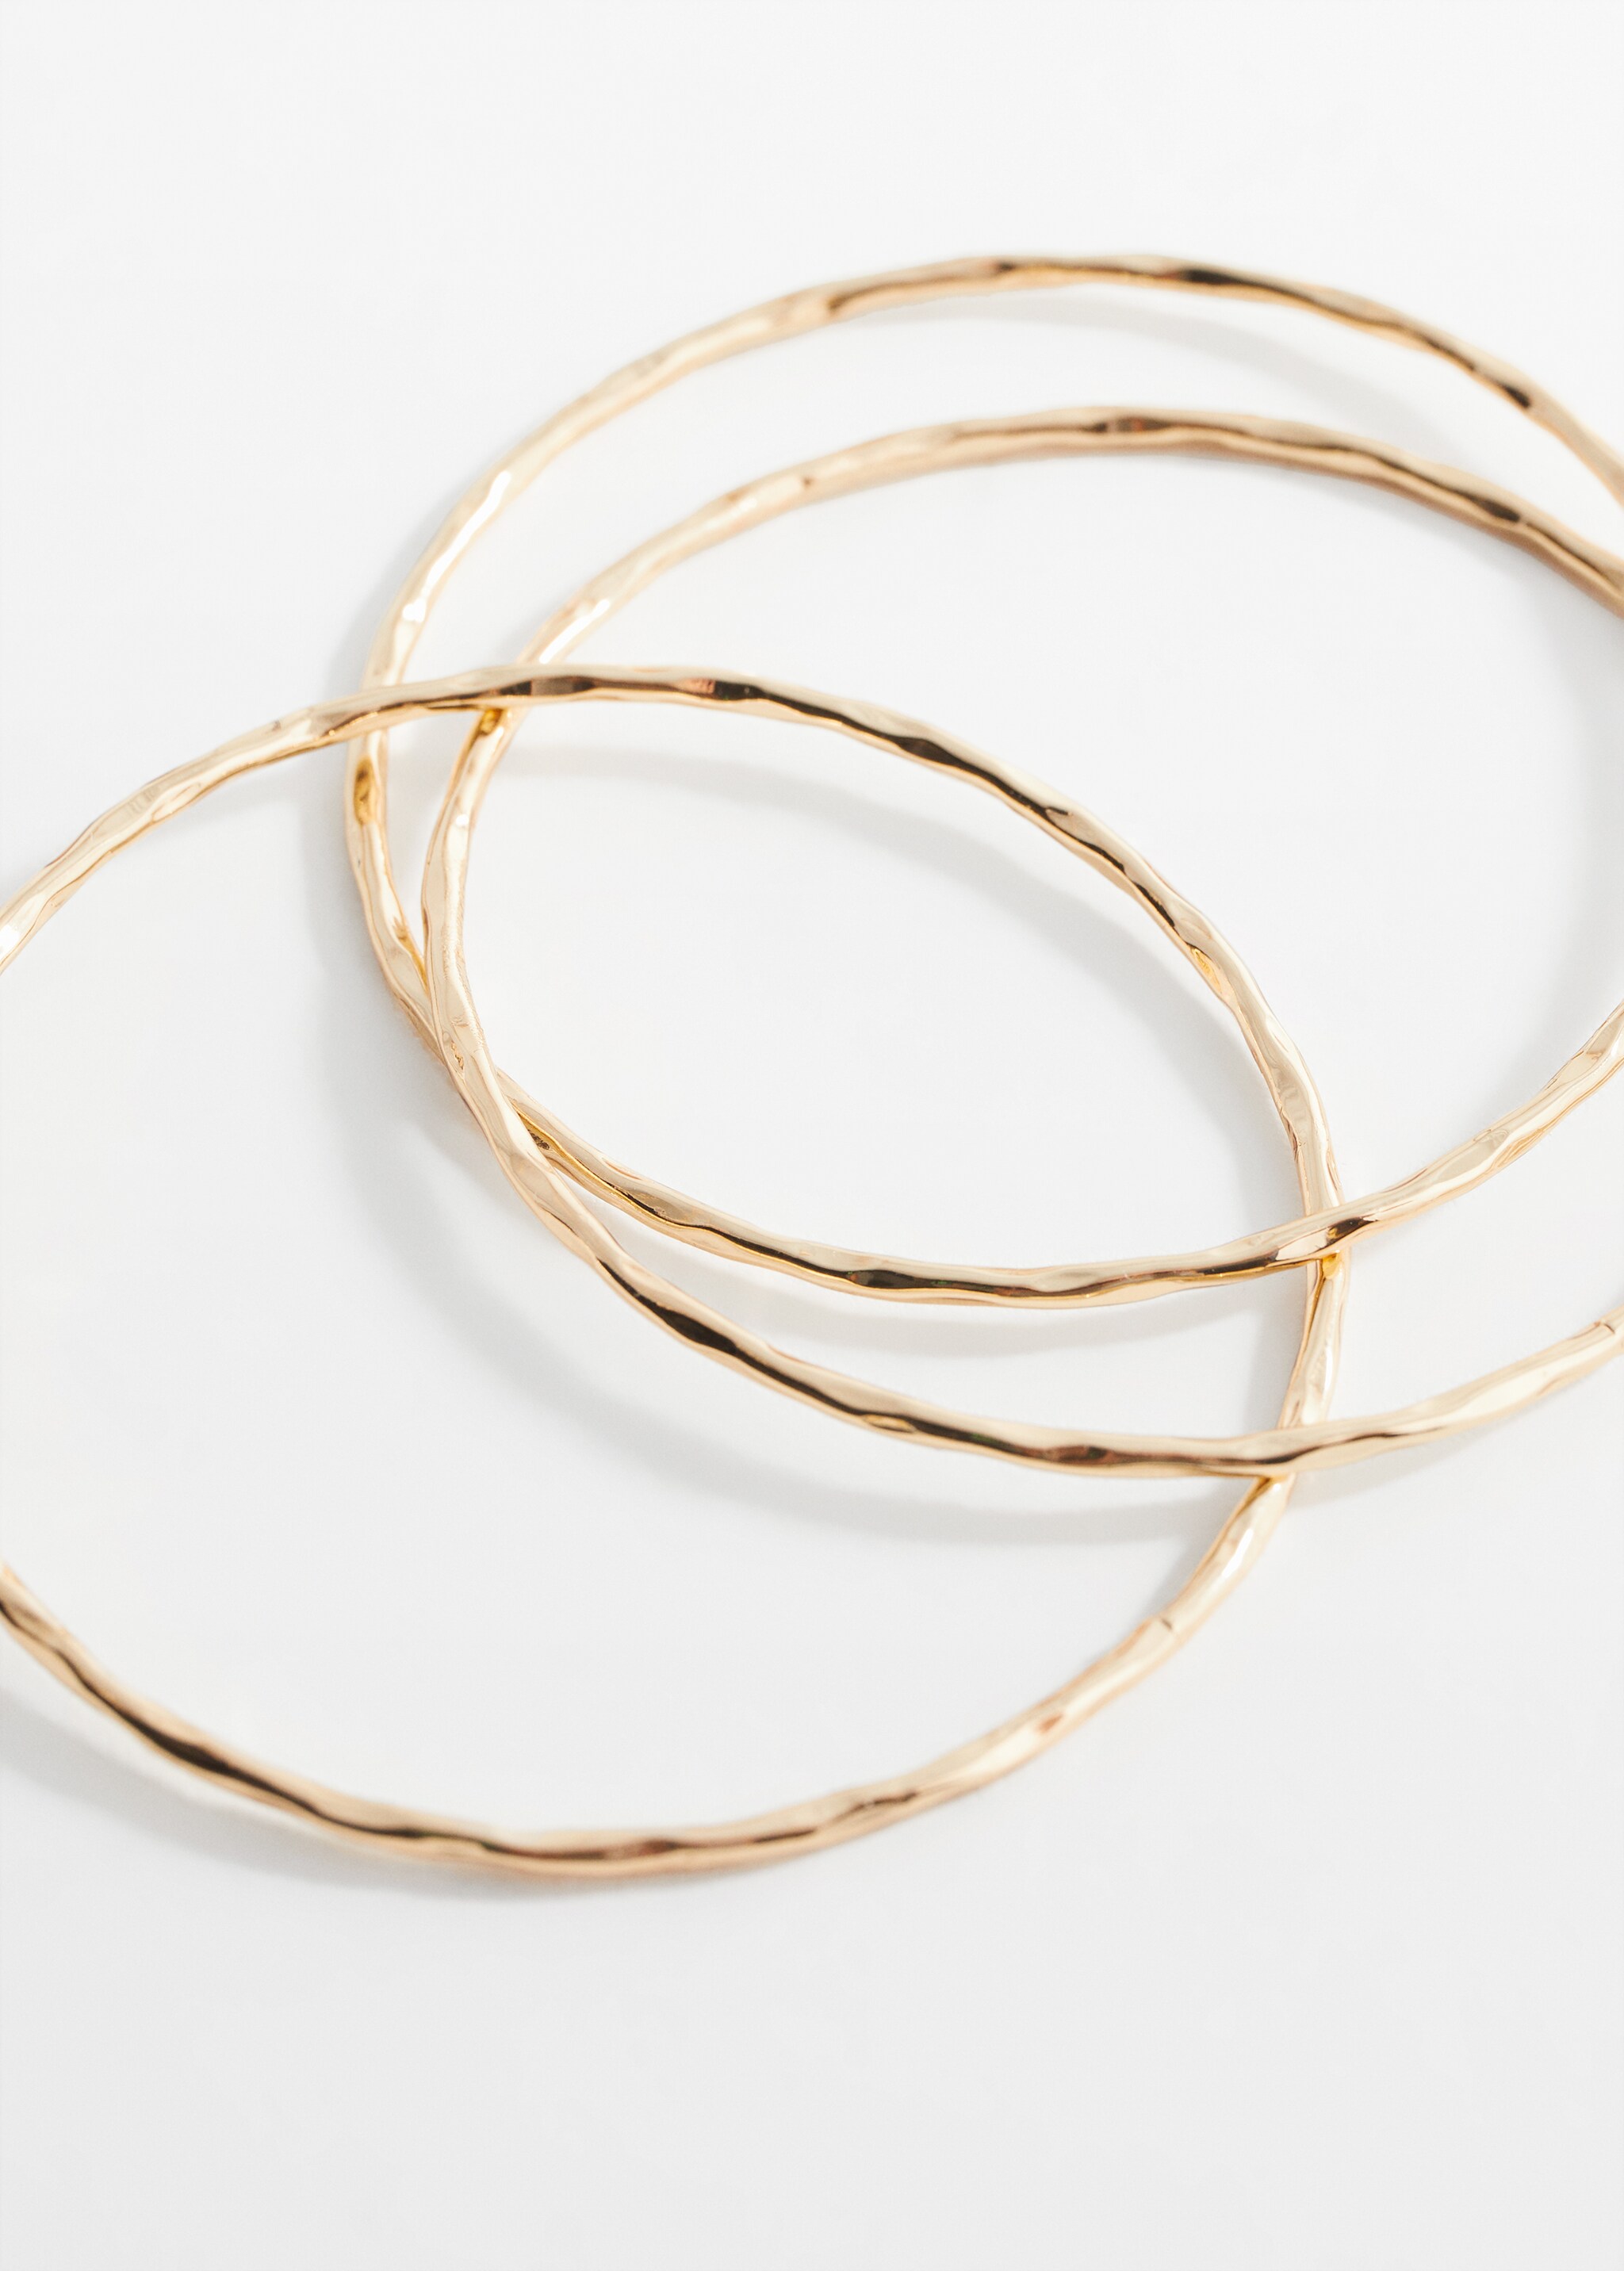 Bracelets anneaux combinées - Plan moyen